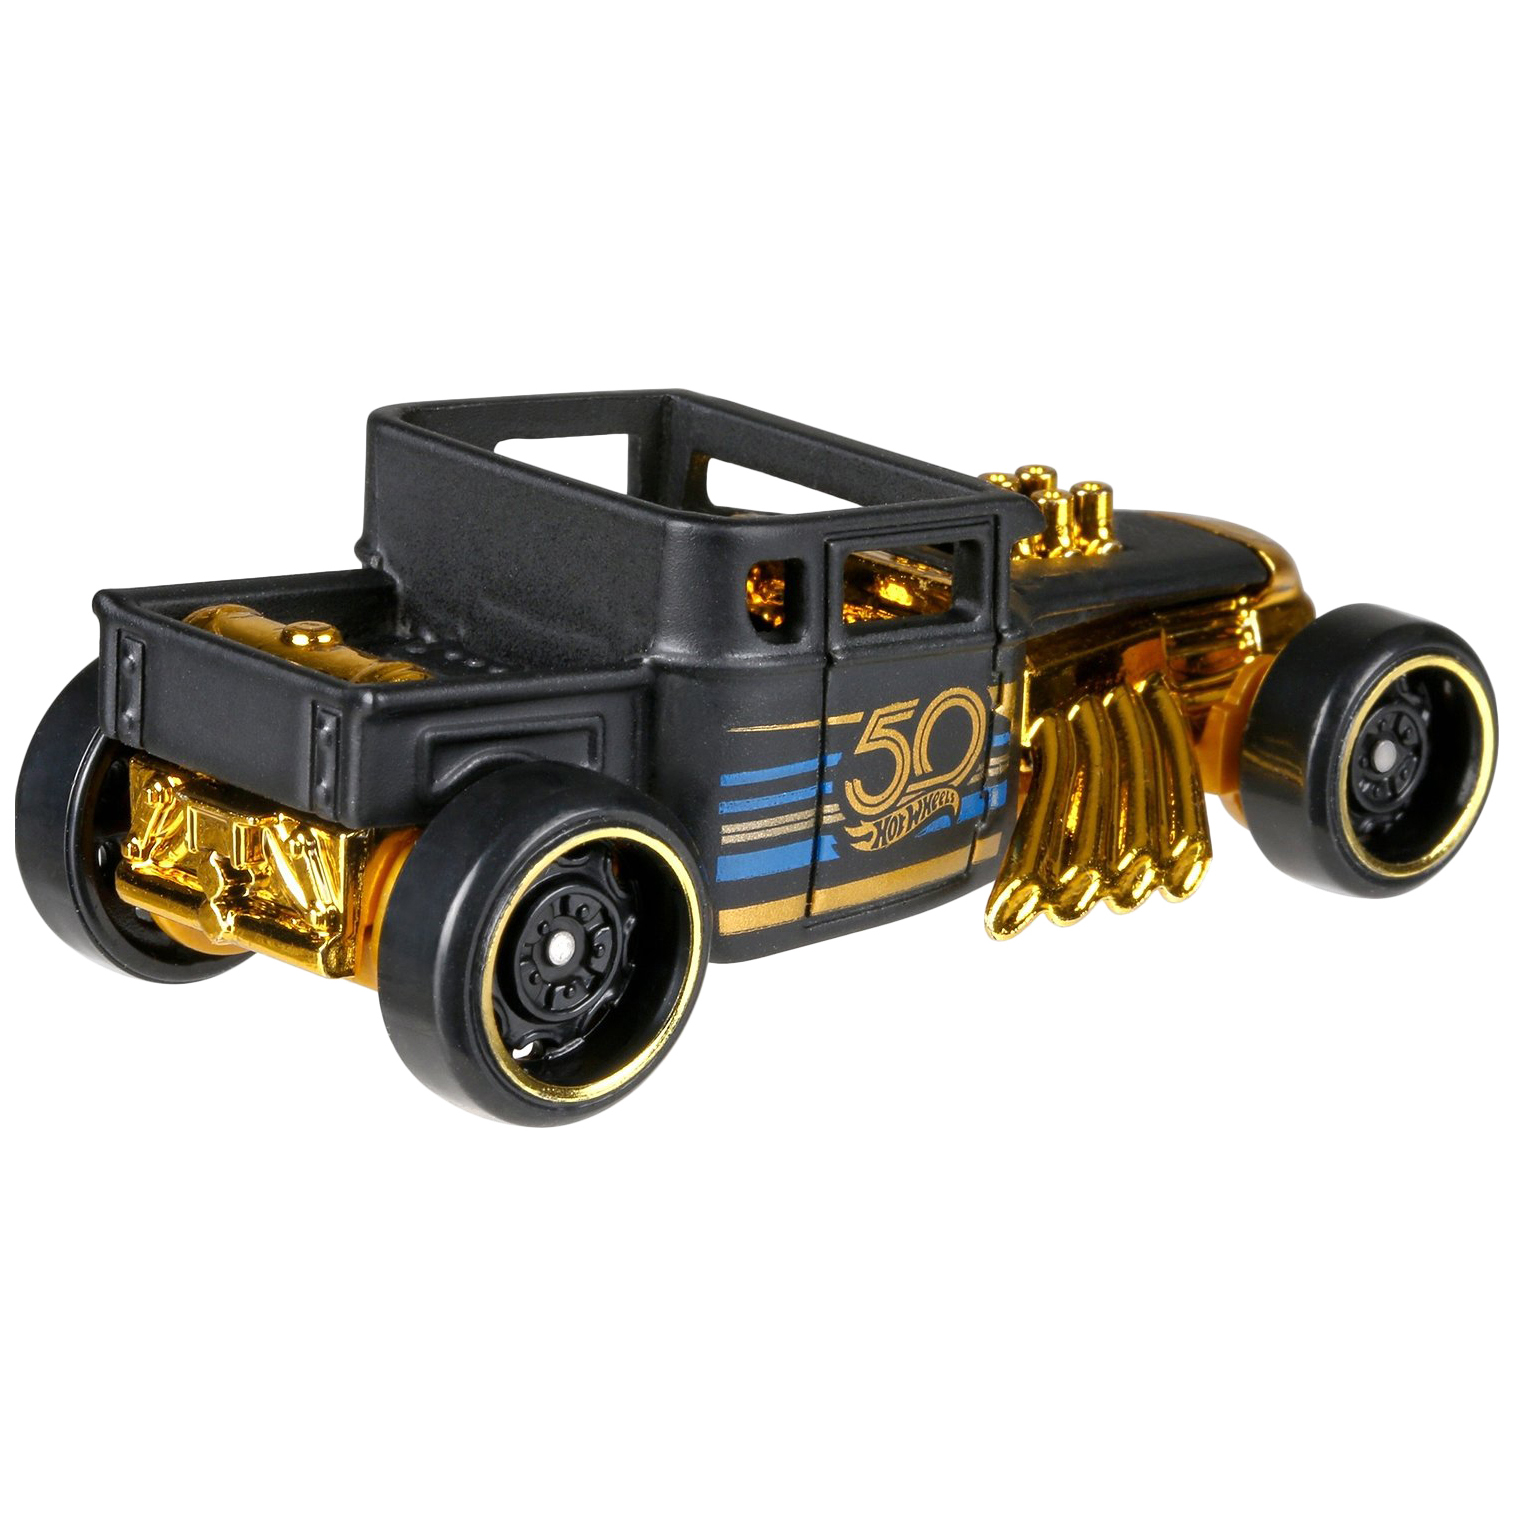 Bone shaker. Машинка hot Wheels Bone Shaker. Hot Wheels 50th Anniversary Black Gold. Хот Вилс Bone Shaker. Машинка hot Wheels Bone Shaker Gold коллекционная.